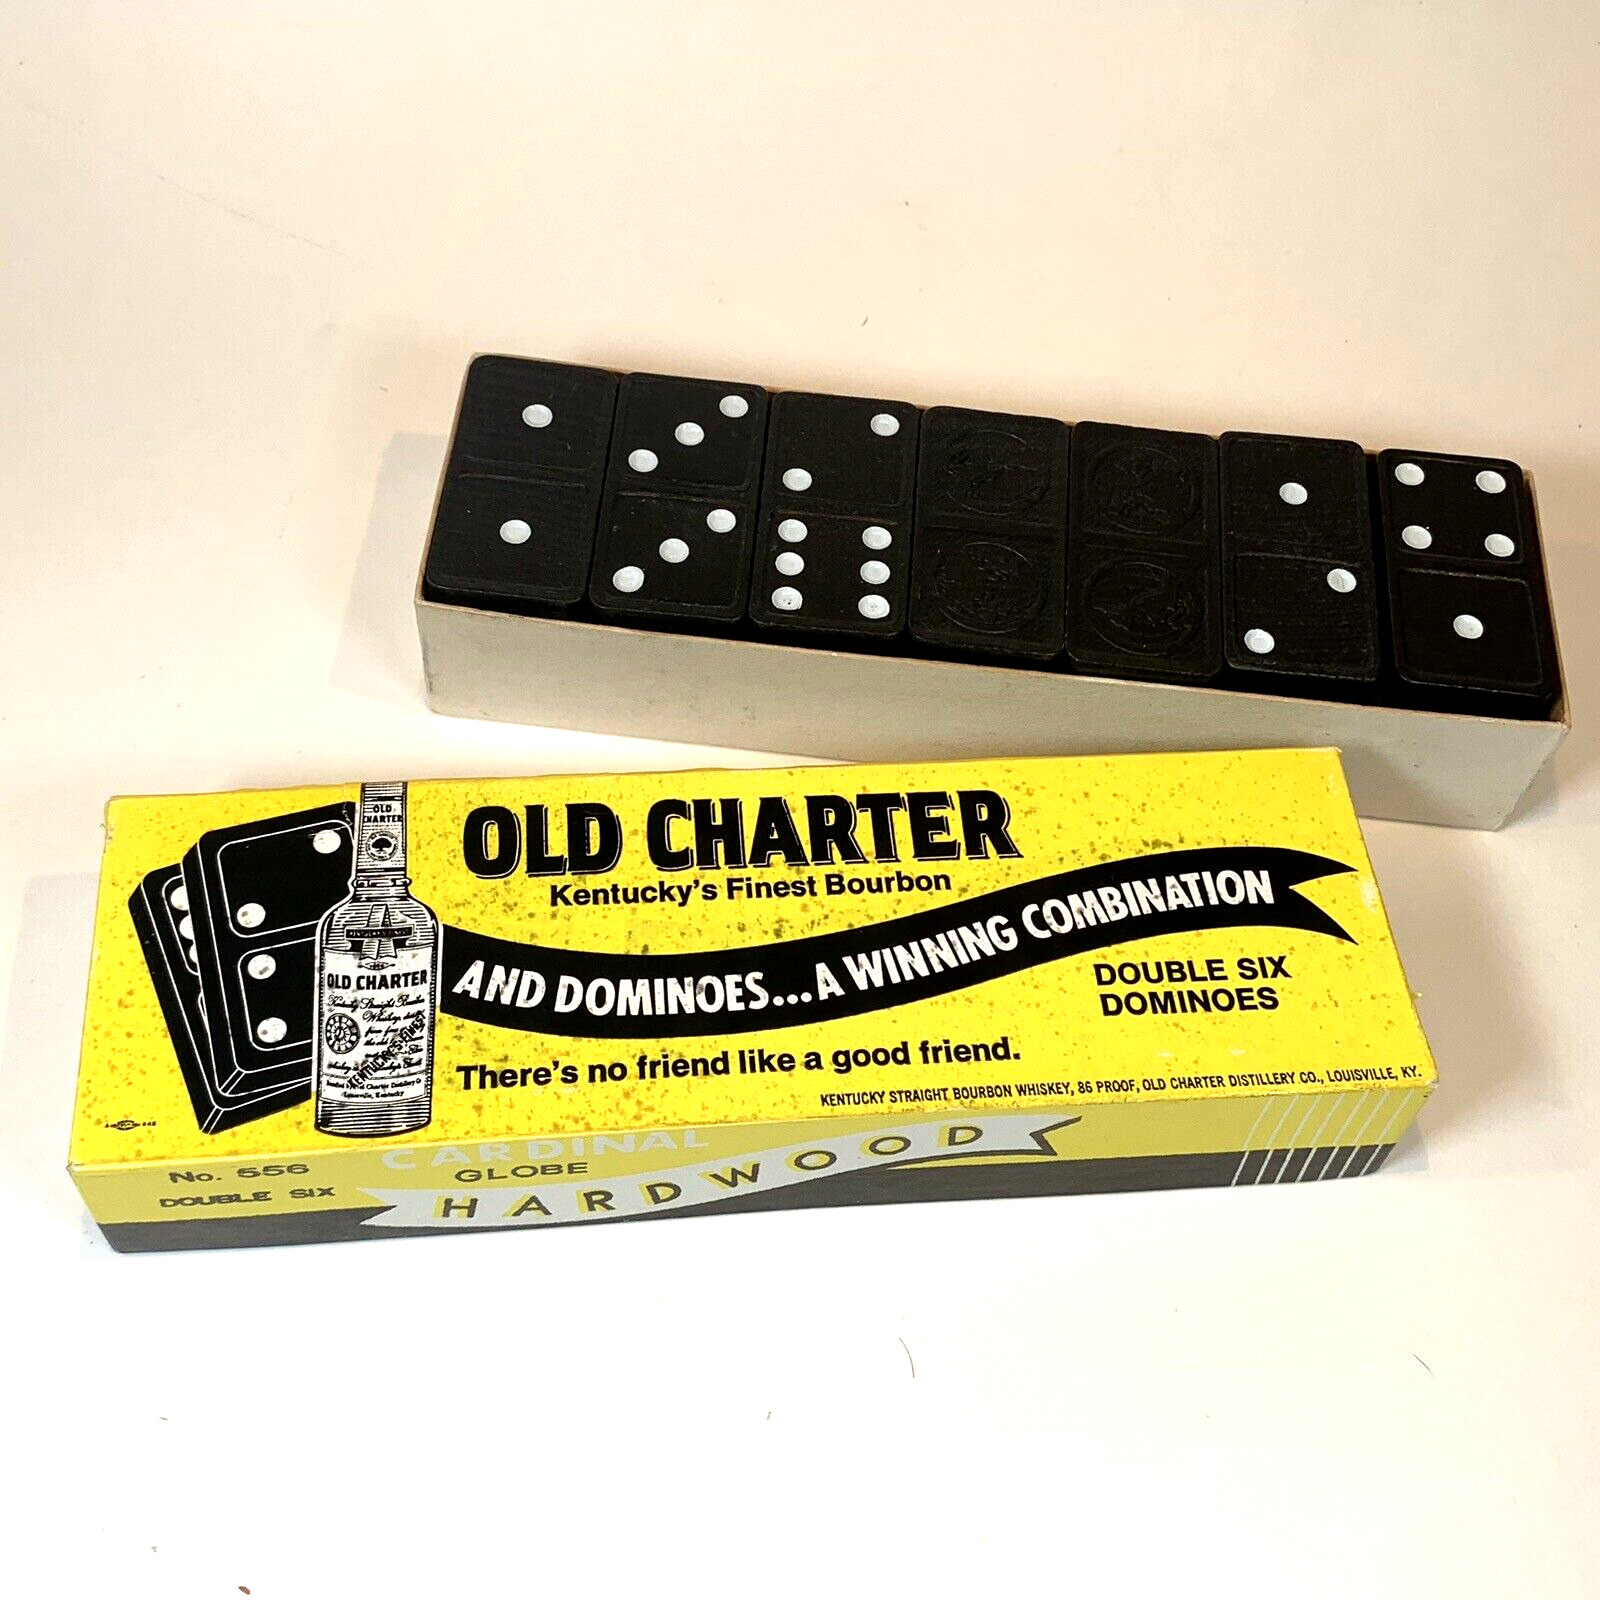 VTG 60s Old Charter Kentucky Bourbon / Cardinal Globe Hardwood Dominoes Set #556